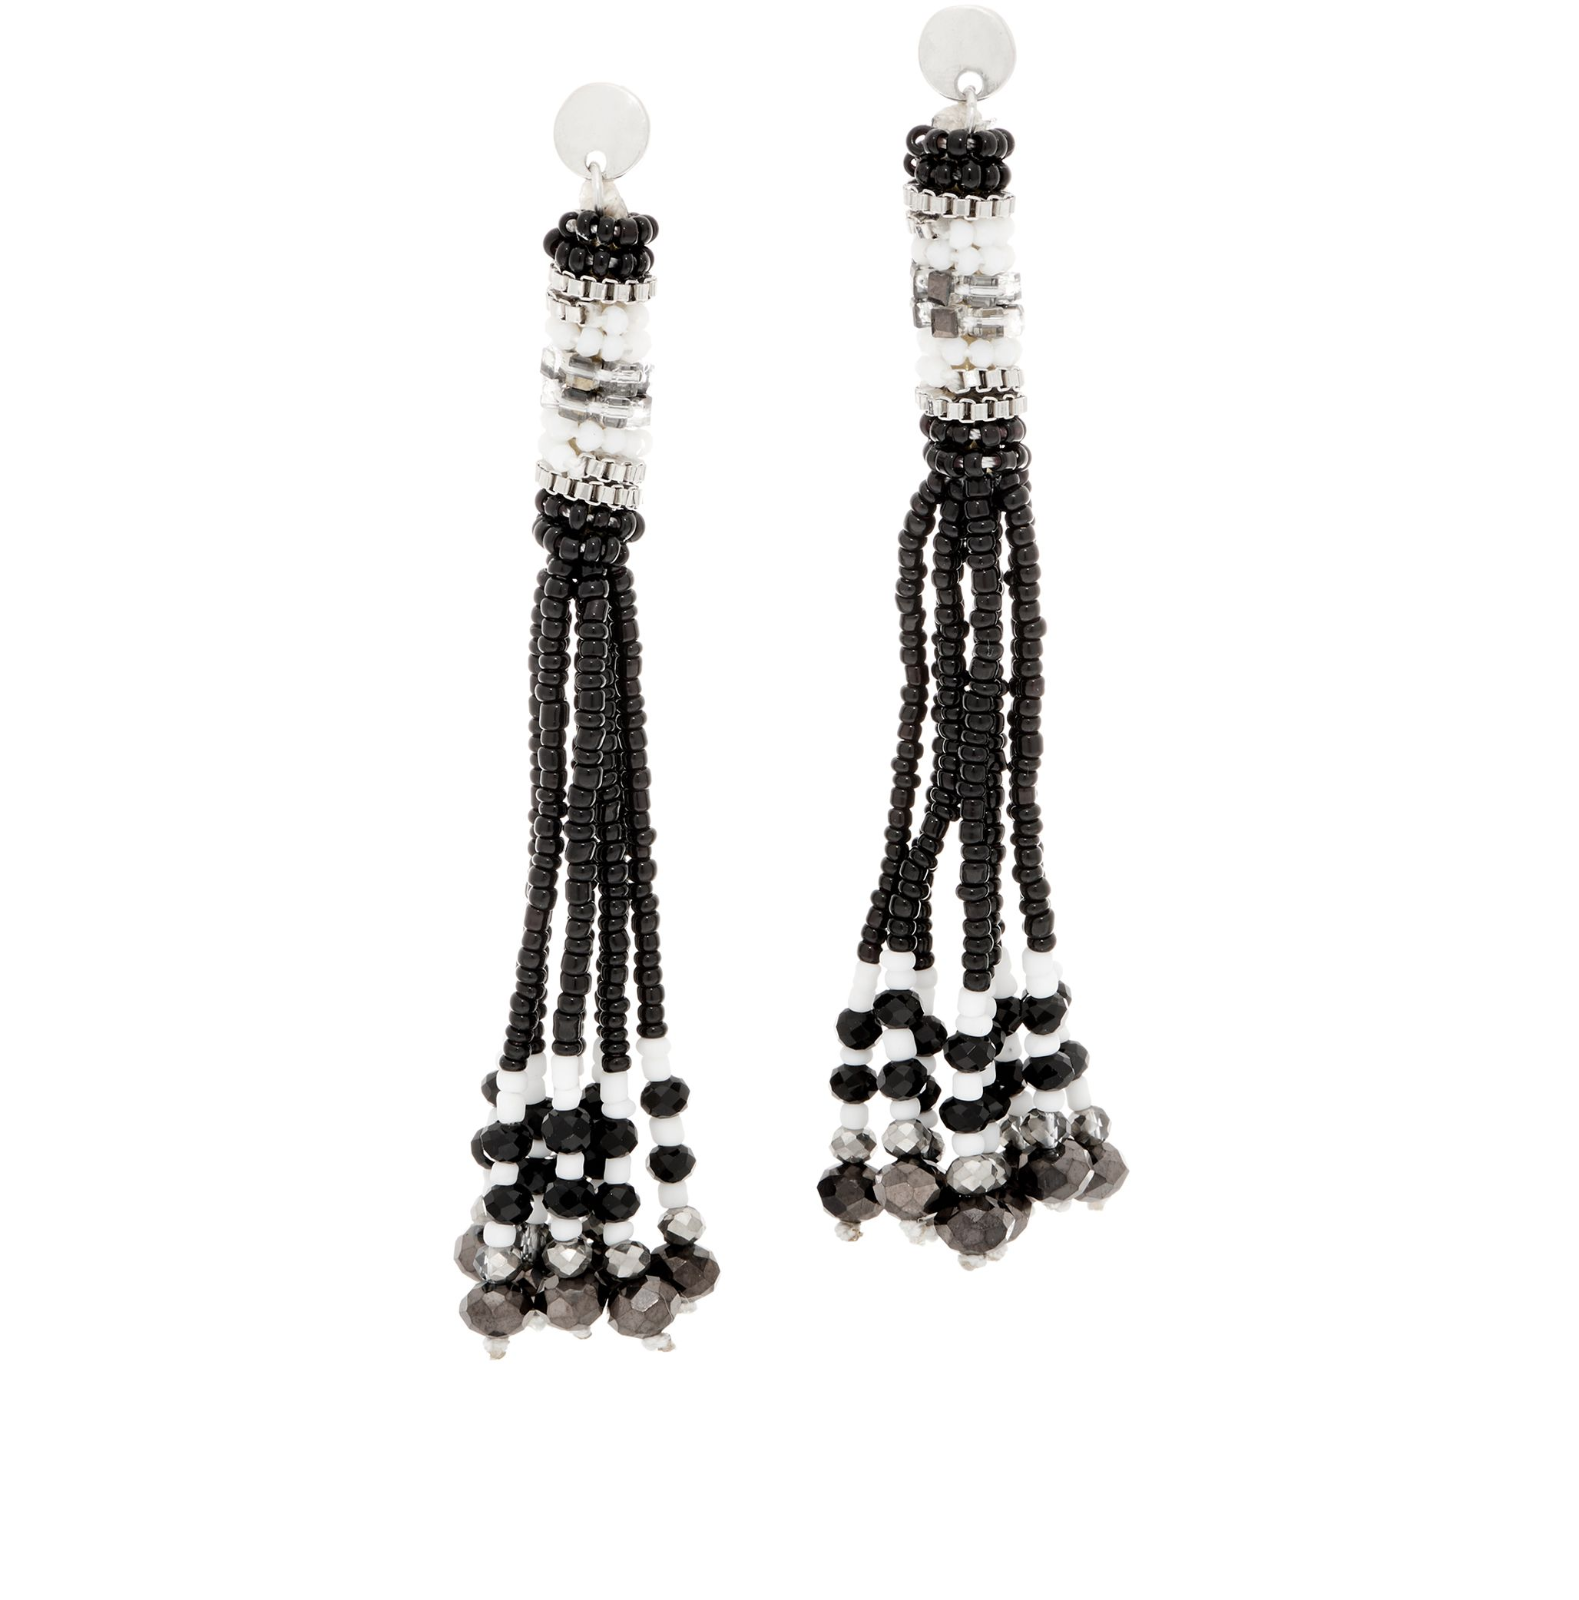 Primary image for The Marrakesh - Multi-Strand Seed Bead Tassel Earrings, Black